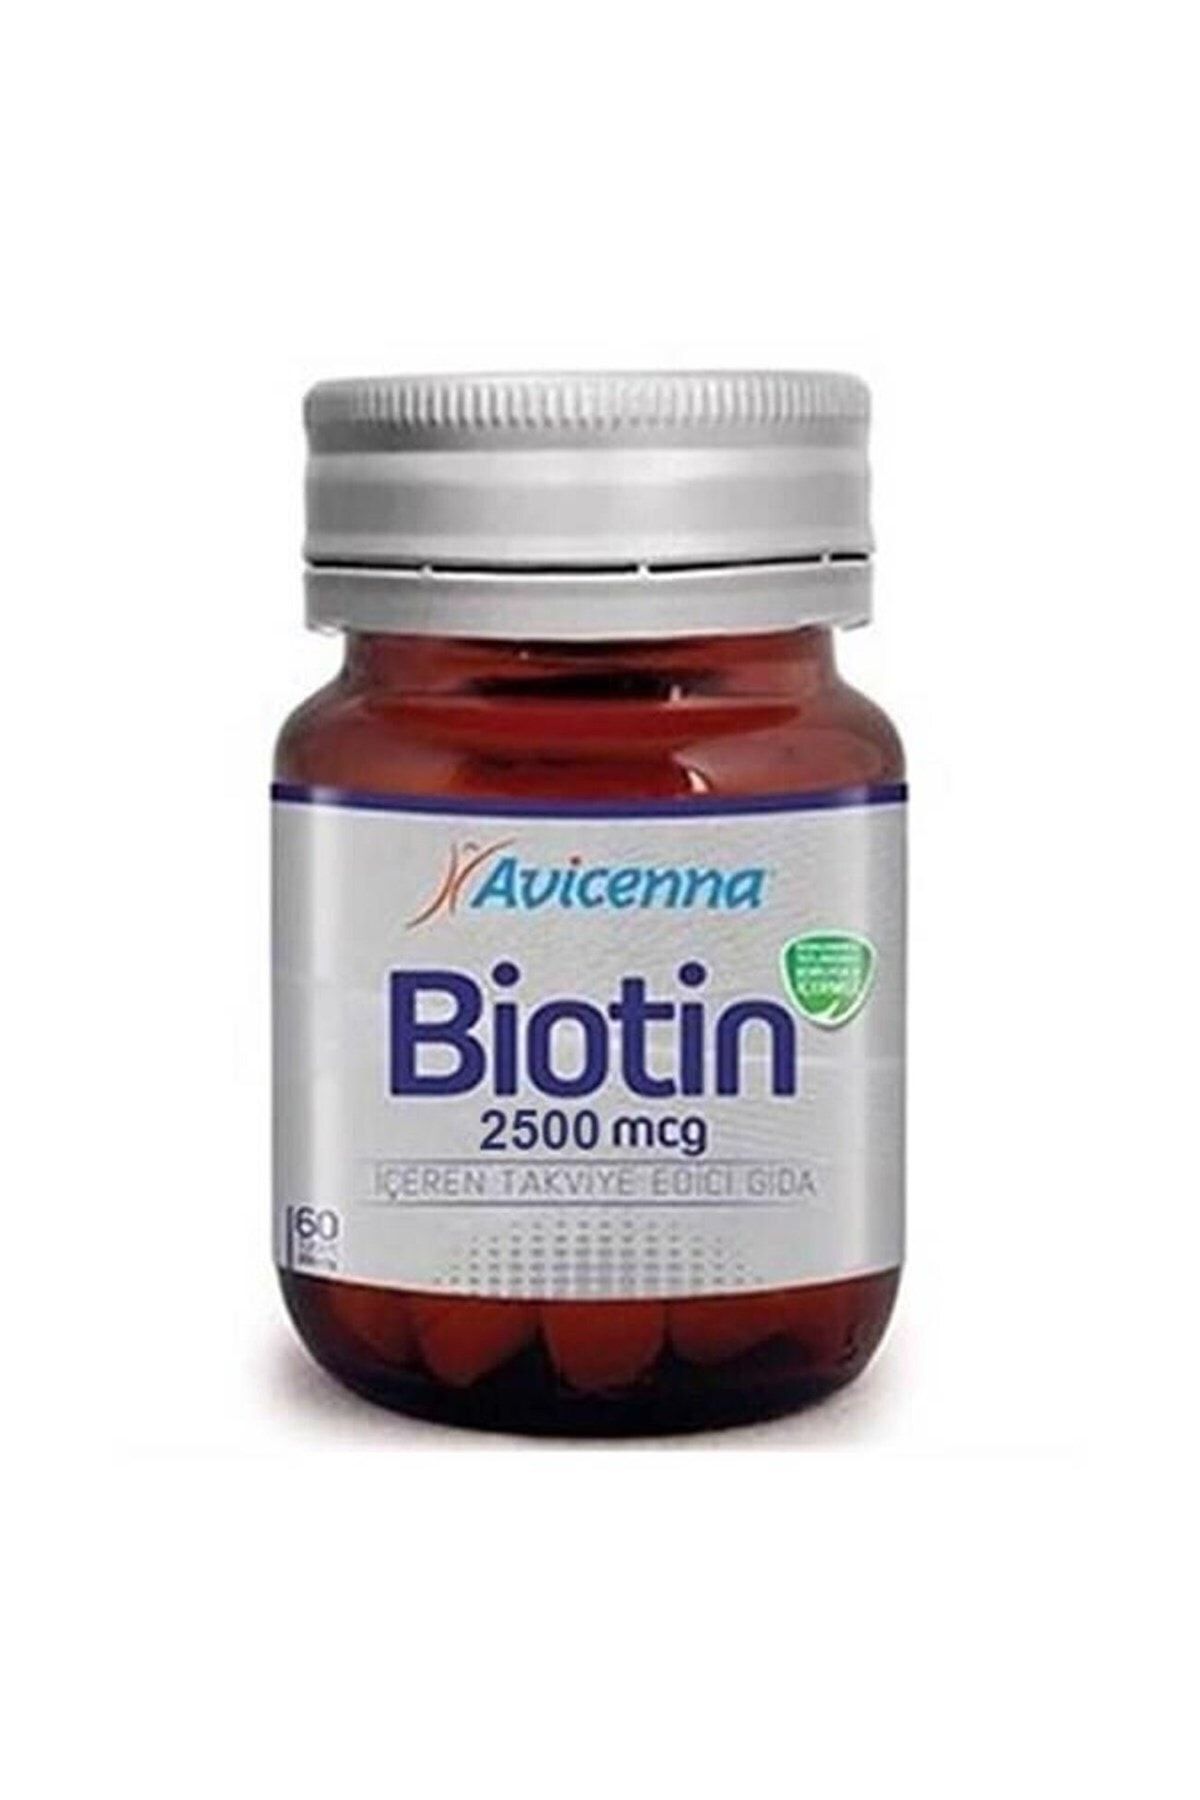 Avicenna Biotin 2500 mcg 60 Tablet